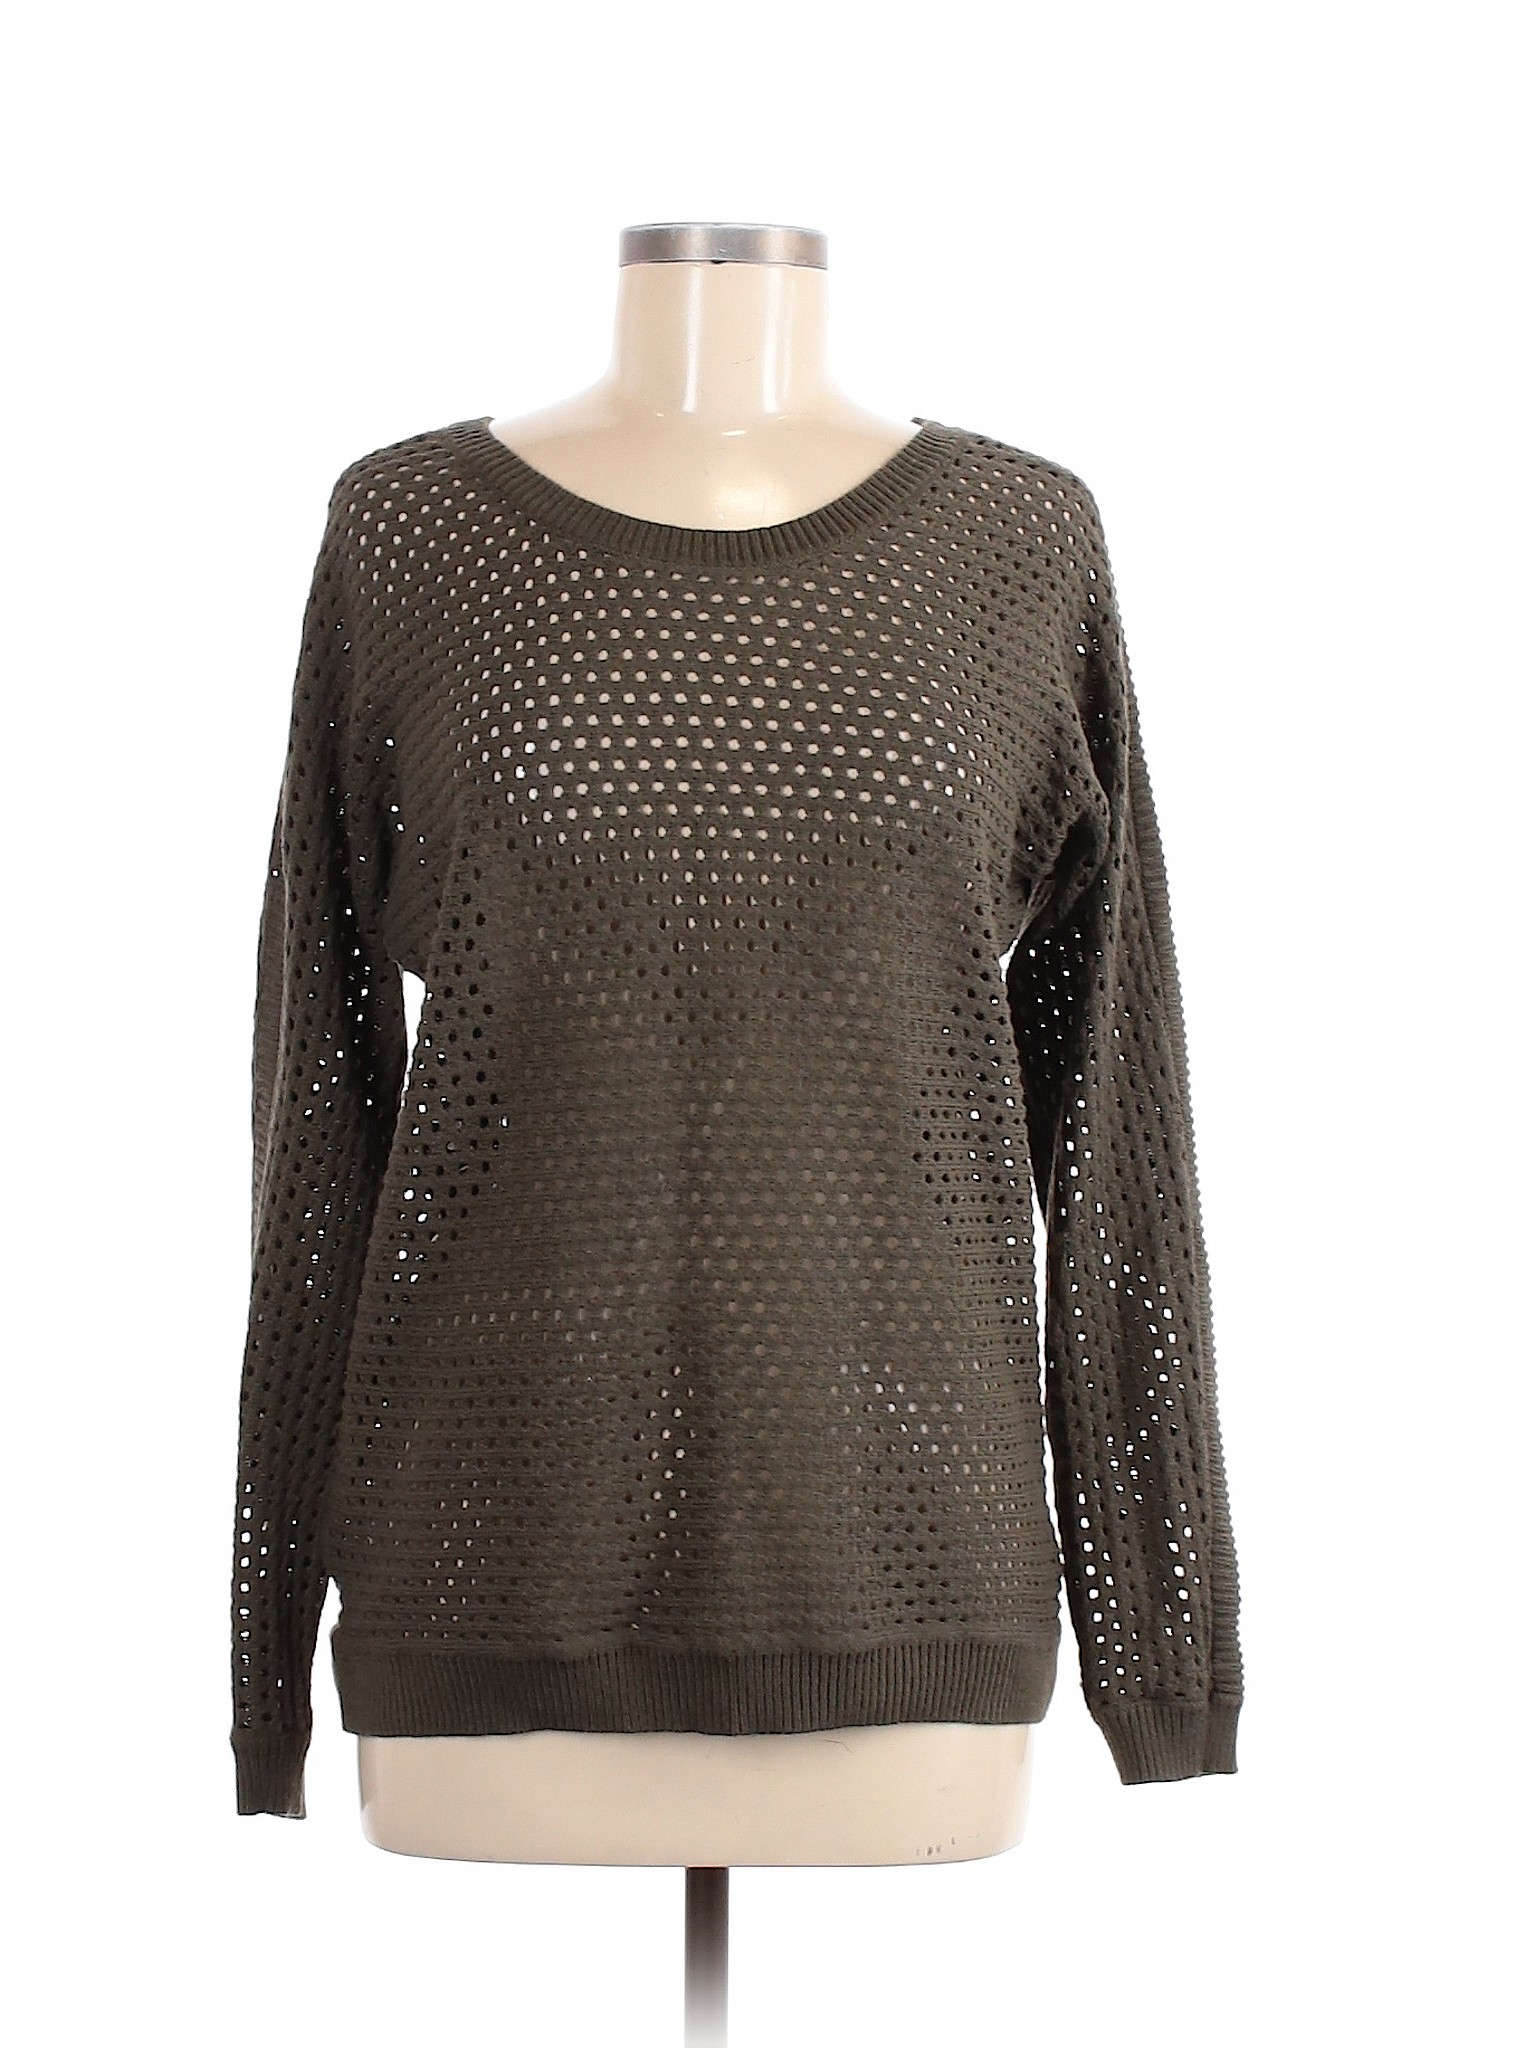 Sonoma Goods for Life Women Green Pullover Sweater M | eBay